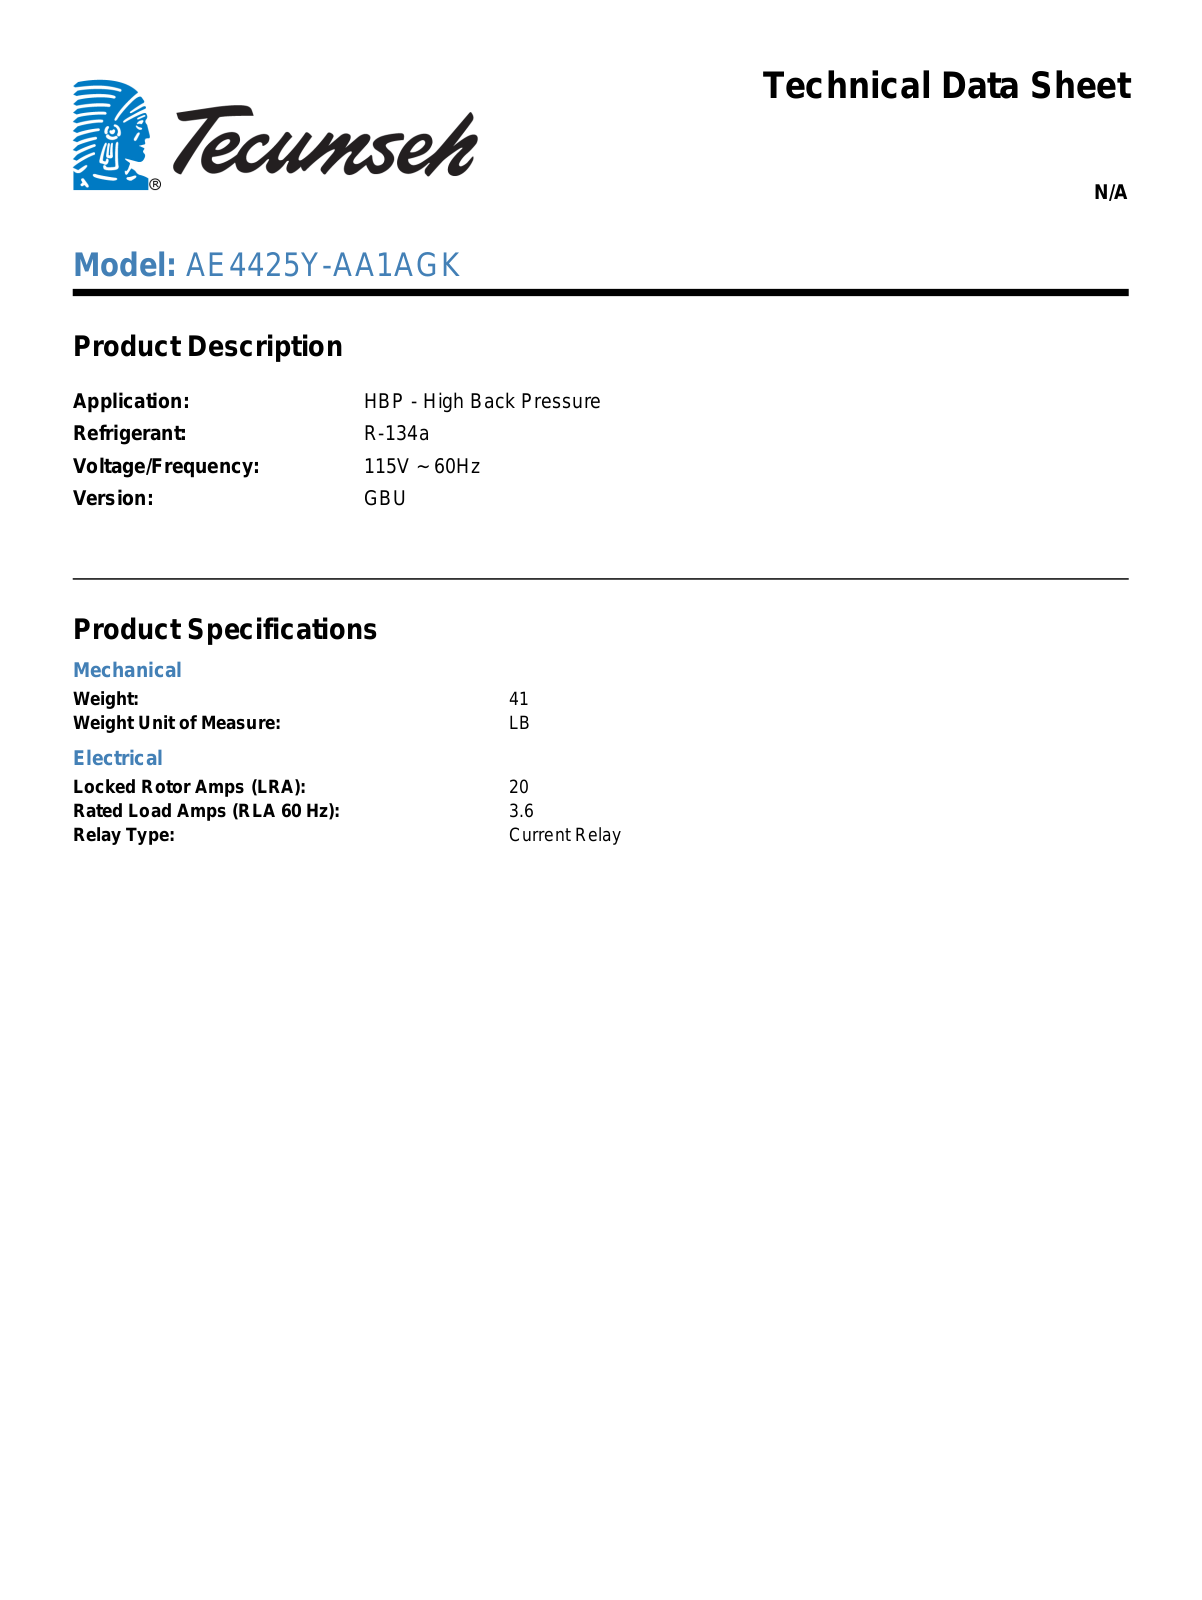 Tecumseh AE4425Y-AA1AGK User Manual